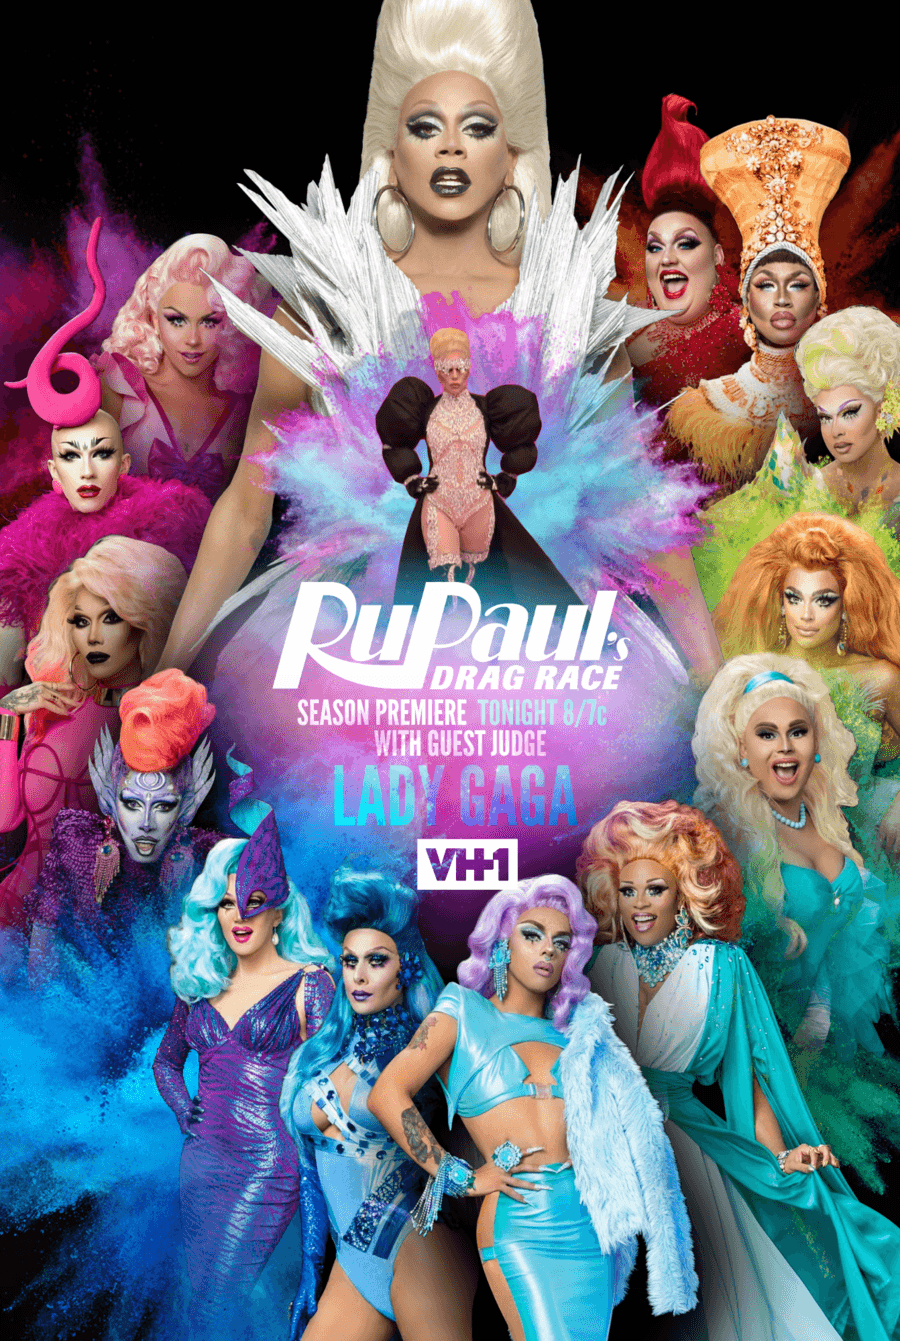 RuPaul's Drag Race Season 9 PREMIERE Poster